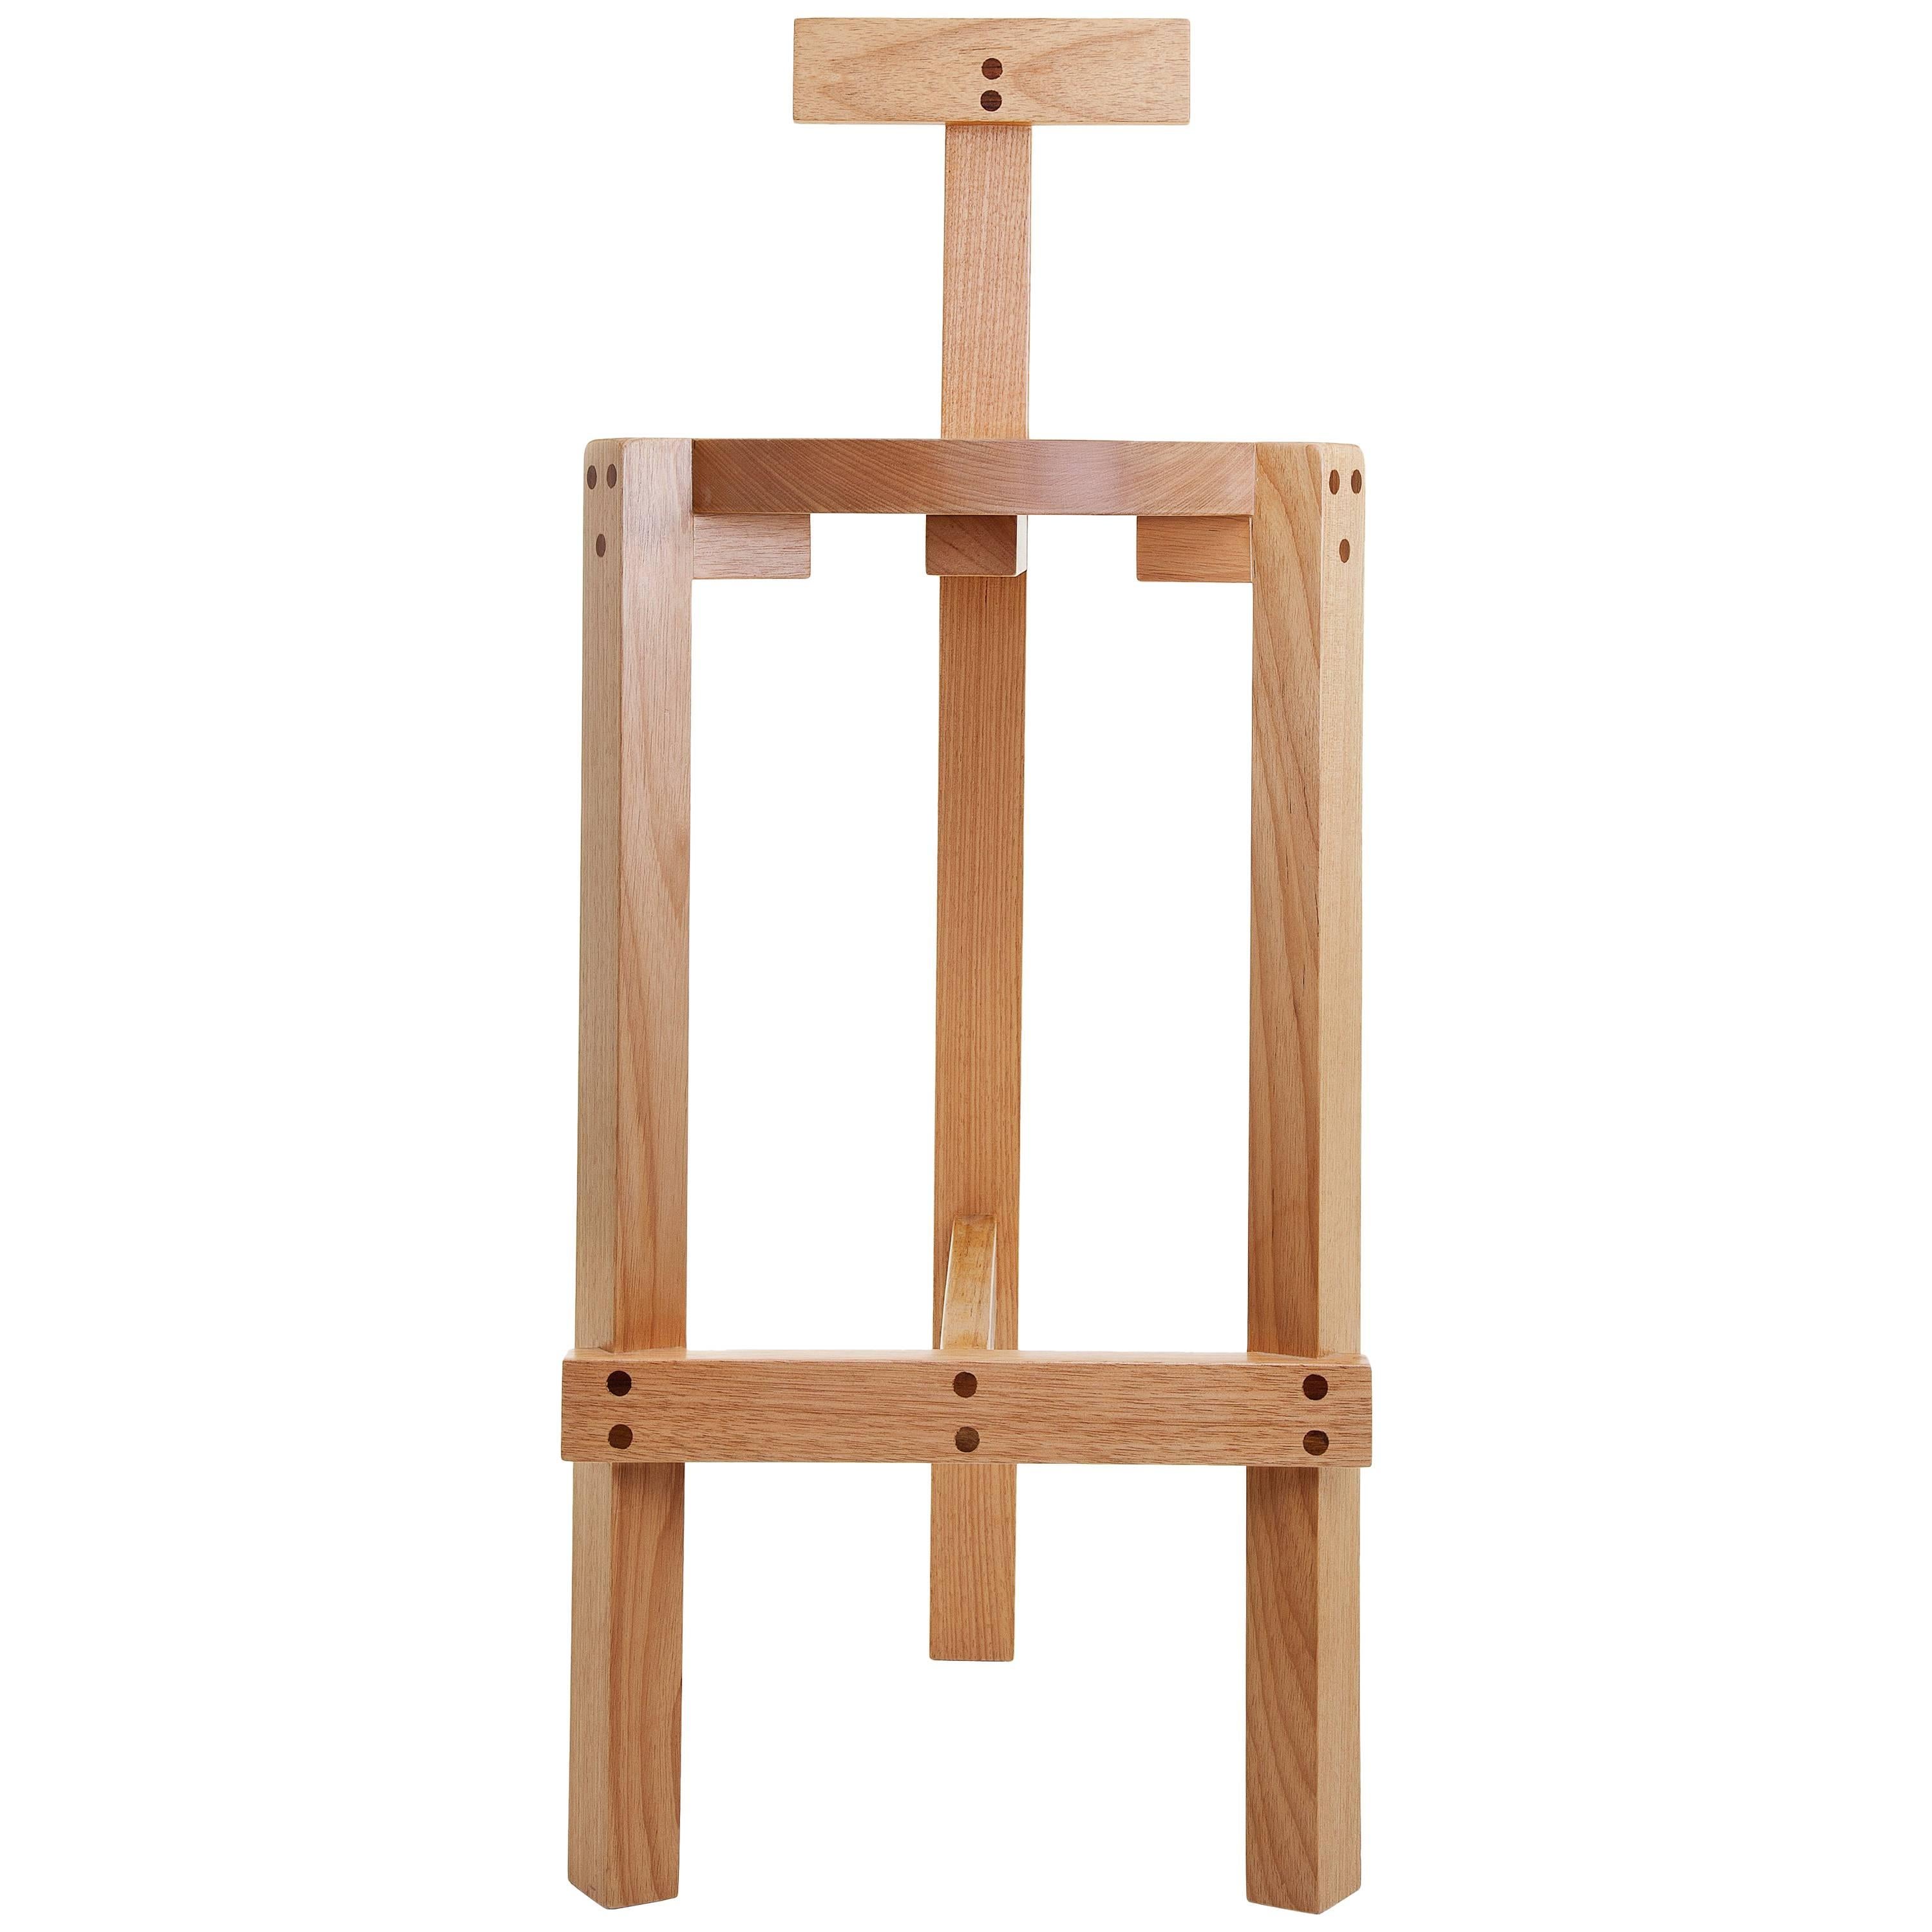 The Girafa bar stool, handmade in Hardwood in a modern Brazilian design, is part of the Girafa furniture family, designed in 1986 by Marcelo Ferraz, Marcelo Suzuki and Lina Bo Bardi, an icon of Brazilian modern design.
Due to its unique shapes, in